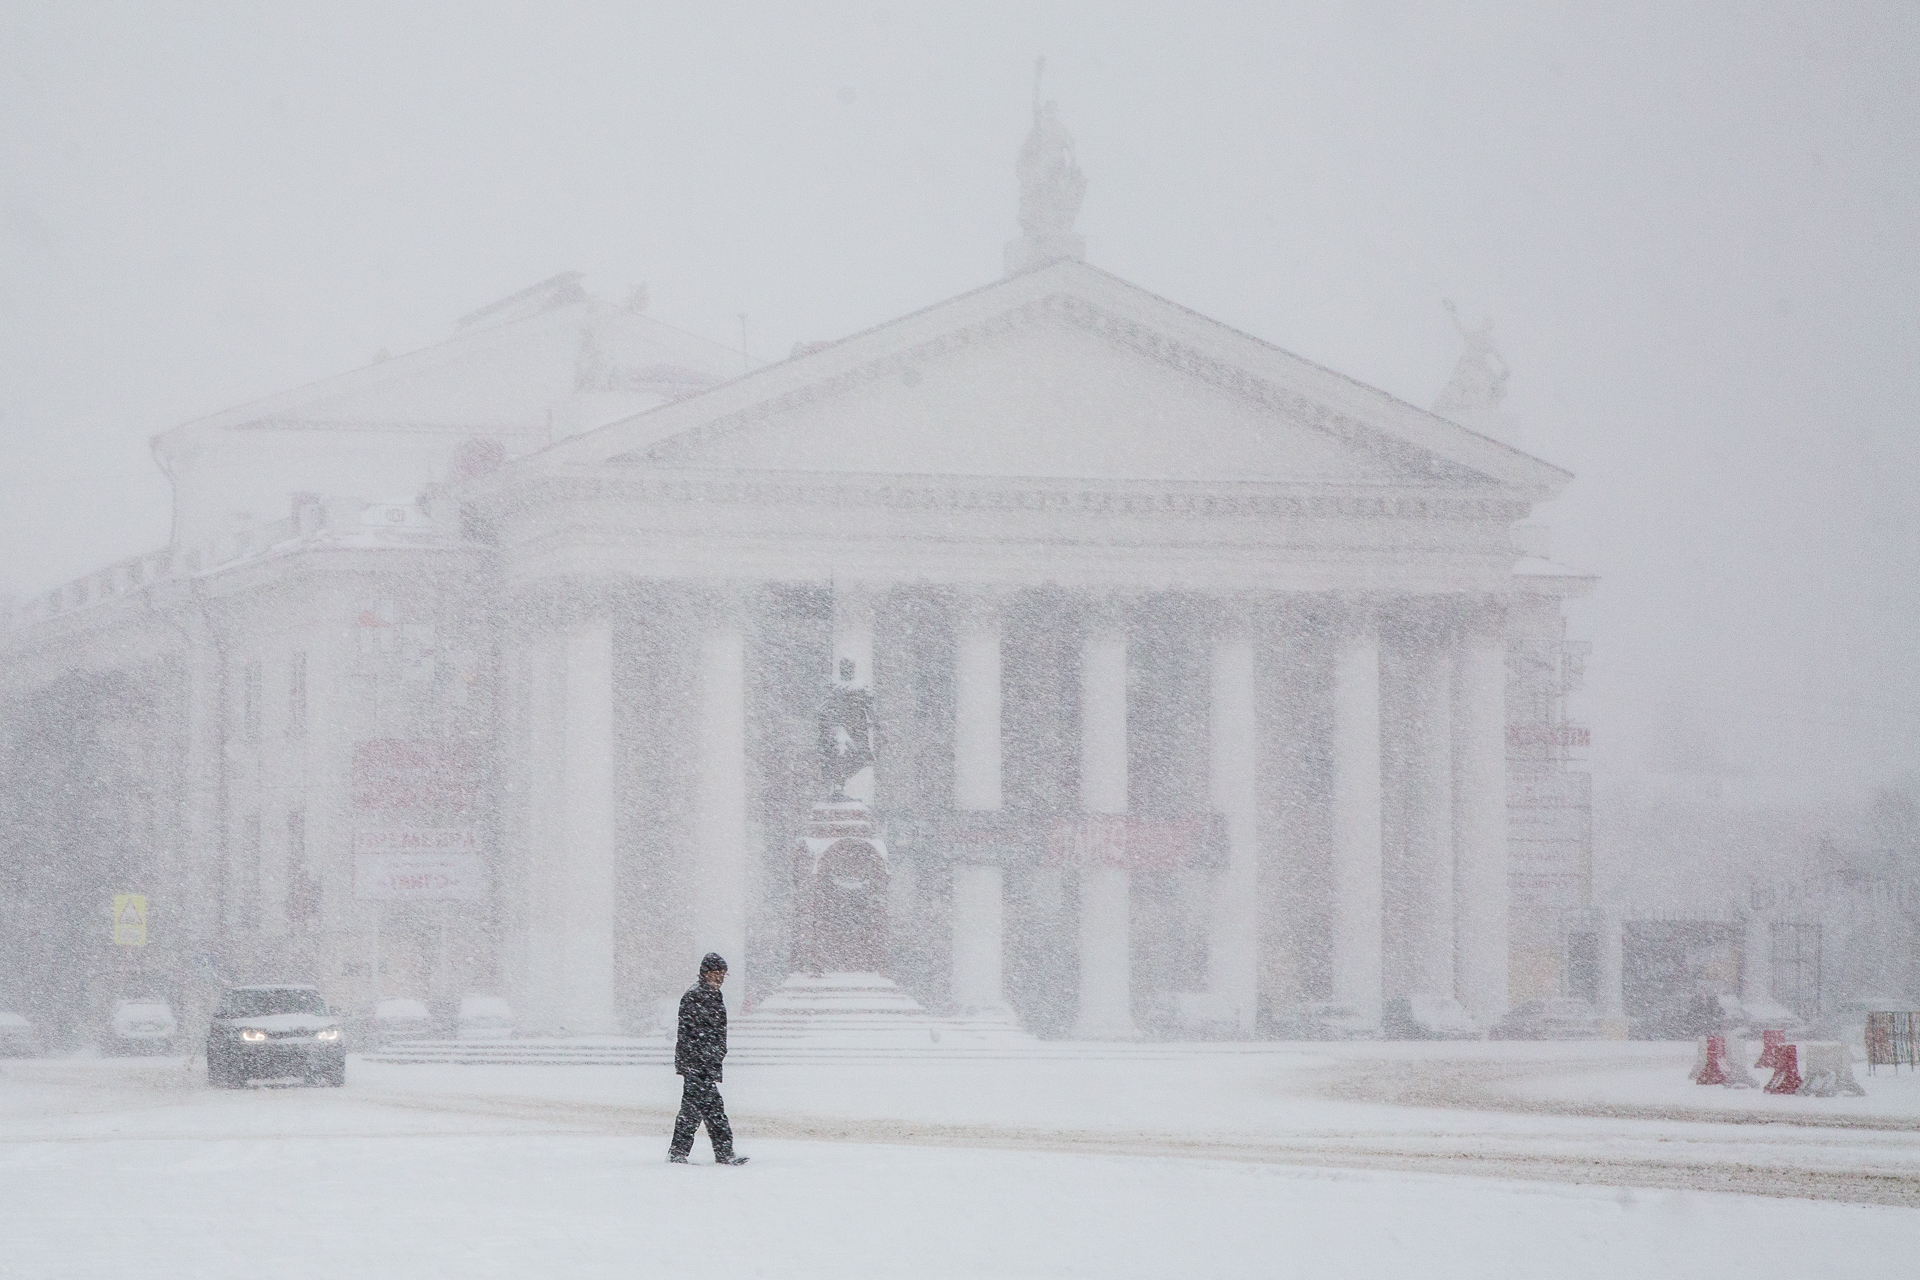 Снегопад в Волгограде